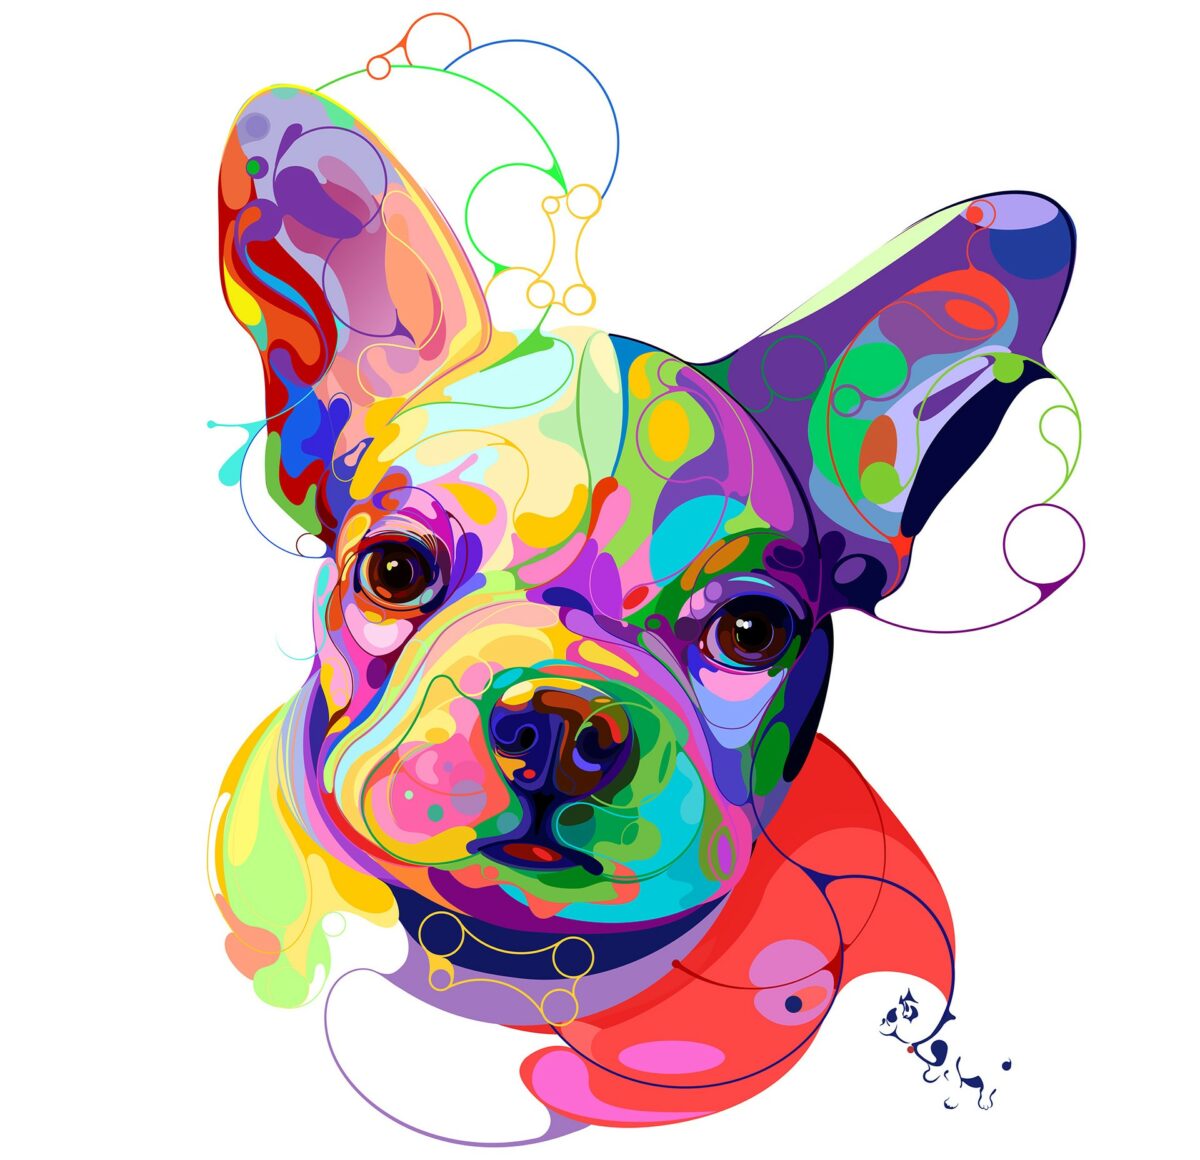 Kaleidoscopic Illustrations Of Expressive Dogs By Marina Okhromenko 8